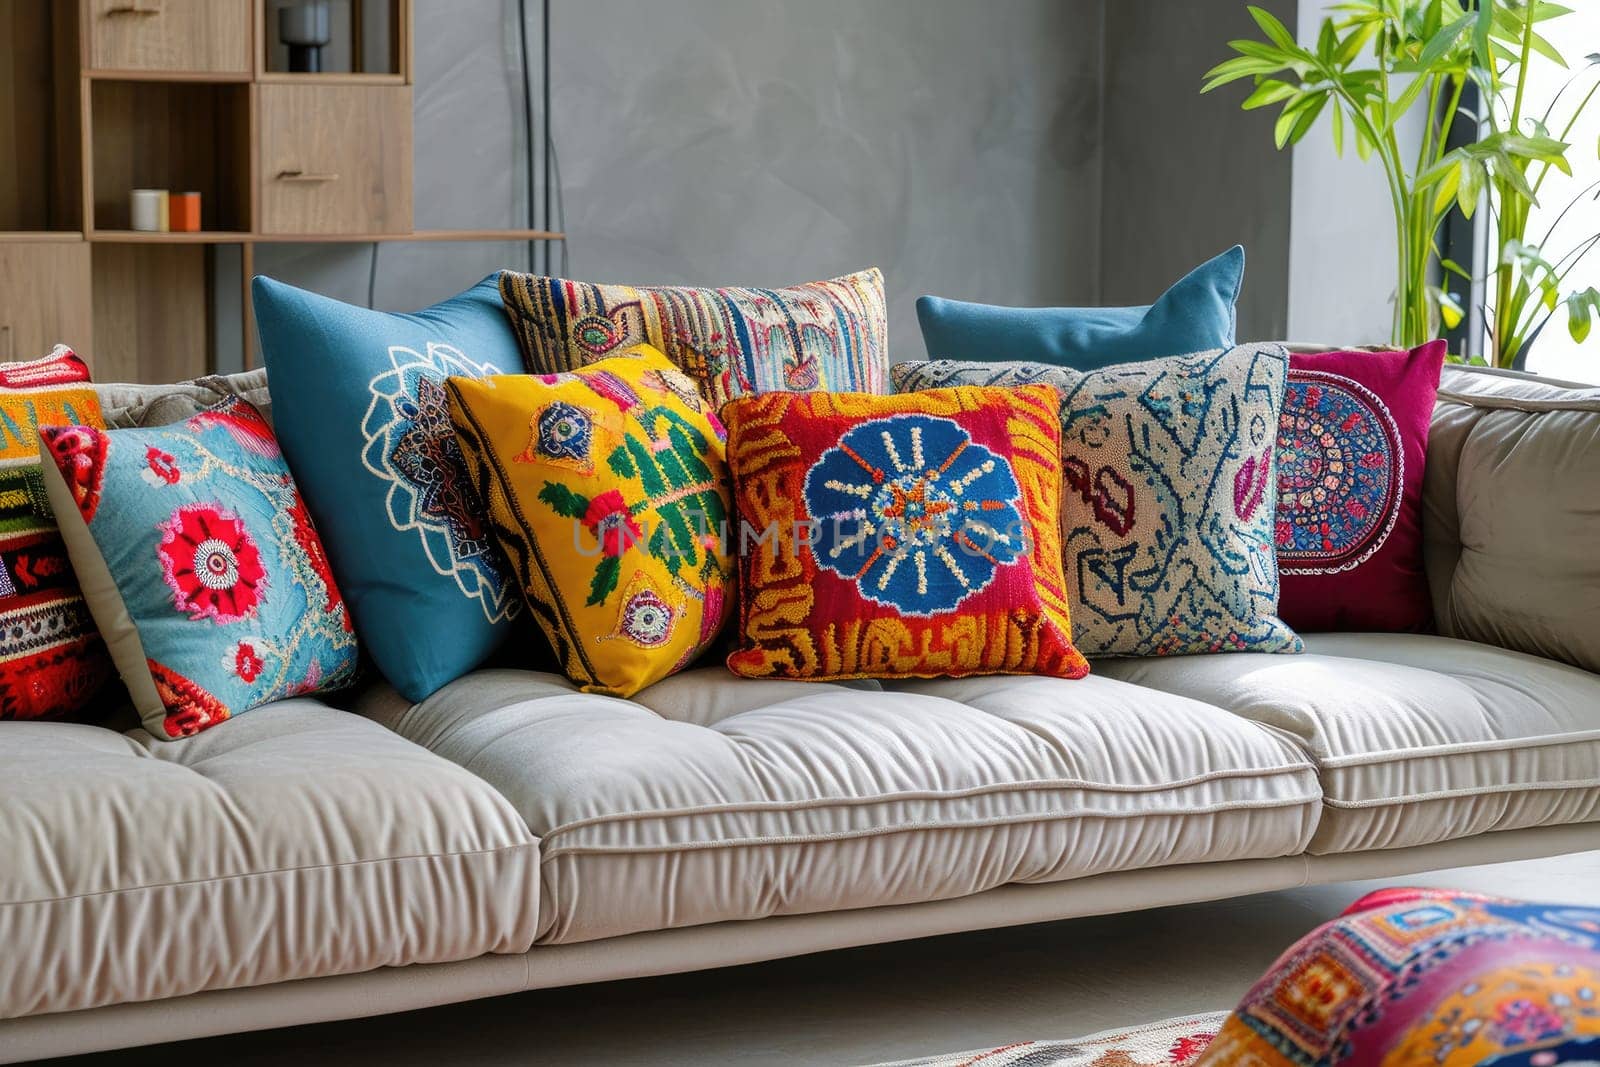 Oriental sofa cushions create a cozy atmosphere by Yurich32